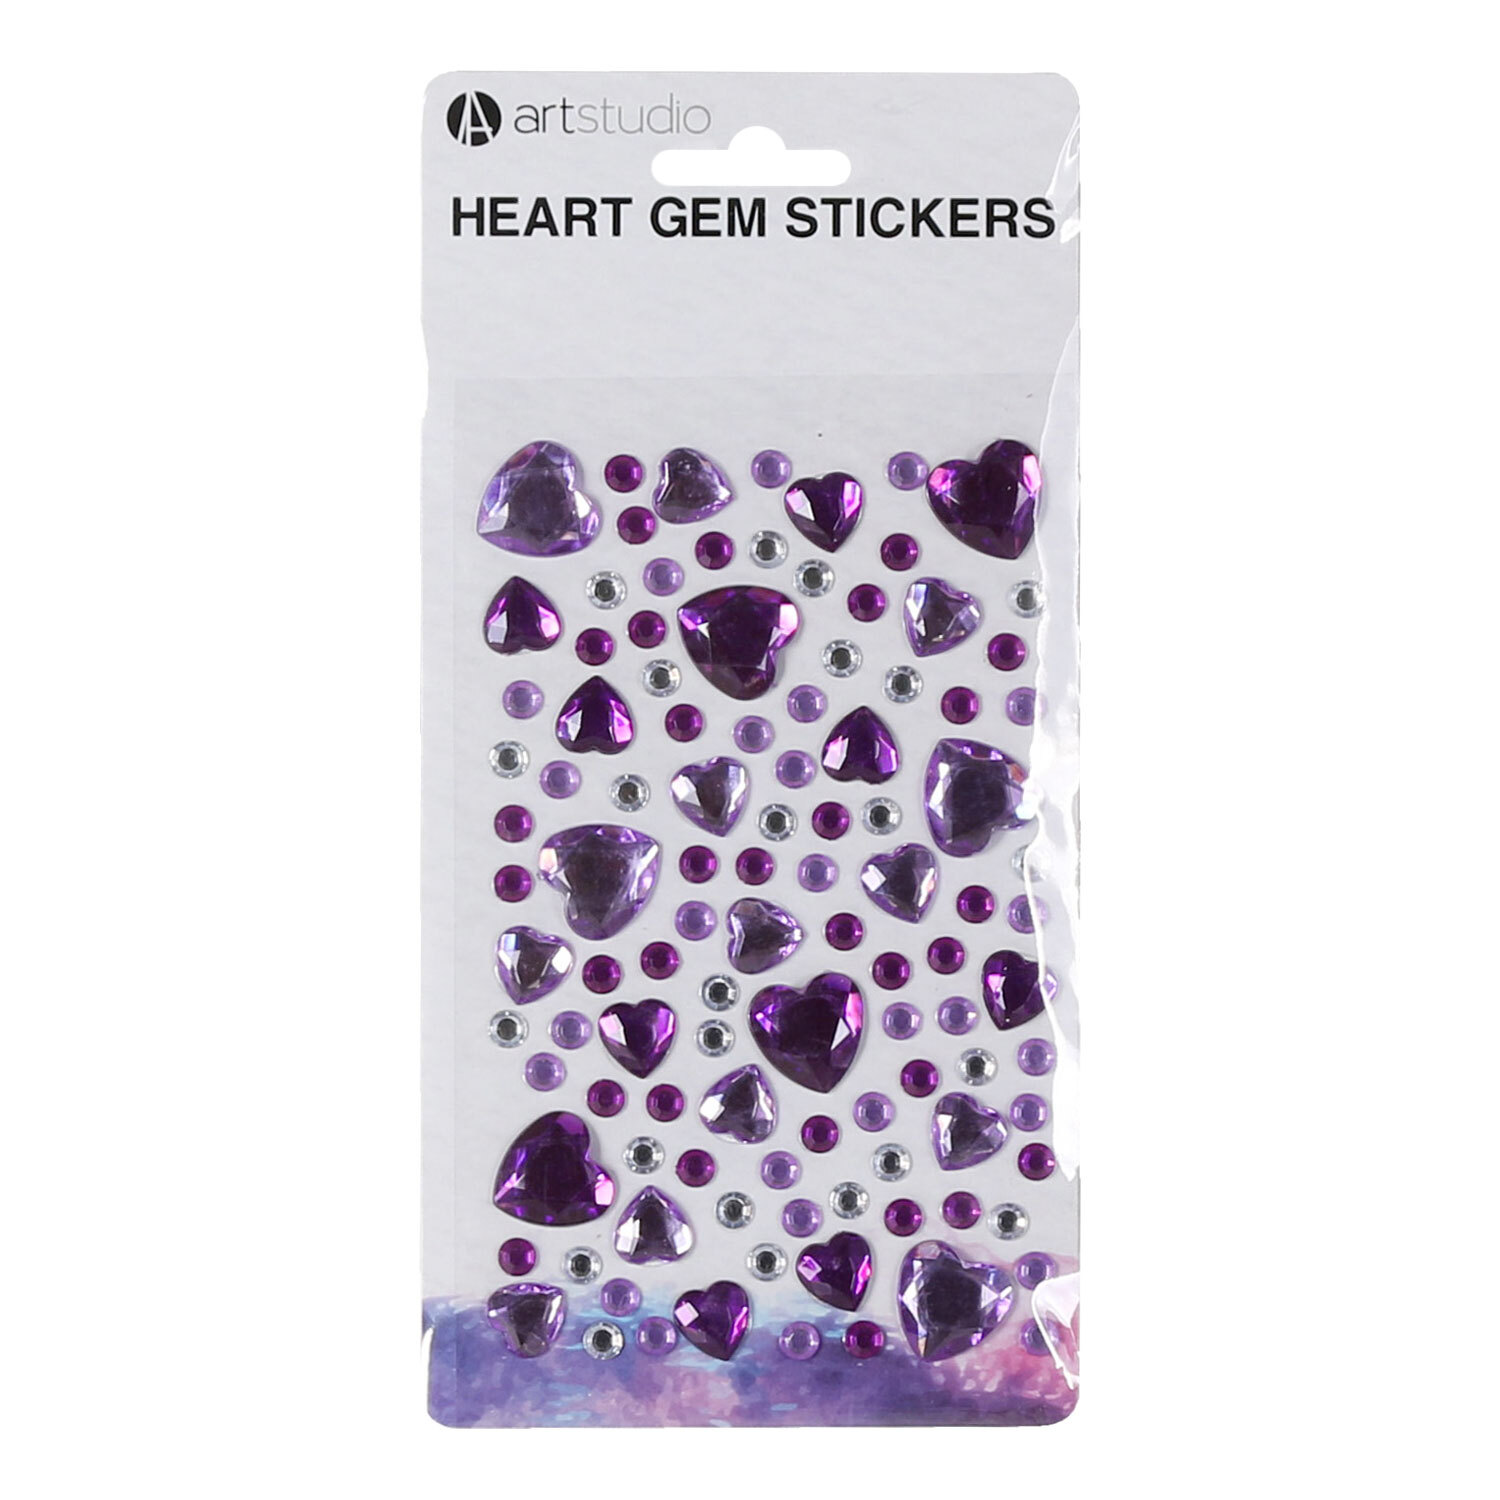 Heart Gem Stickers Image 2